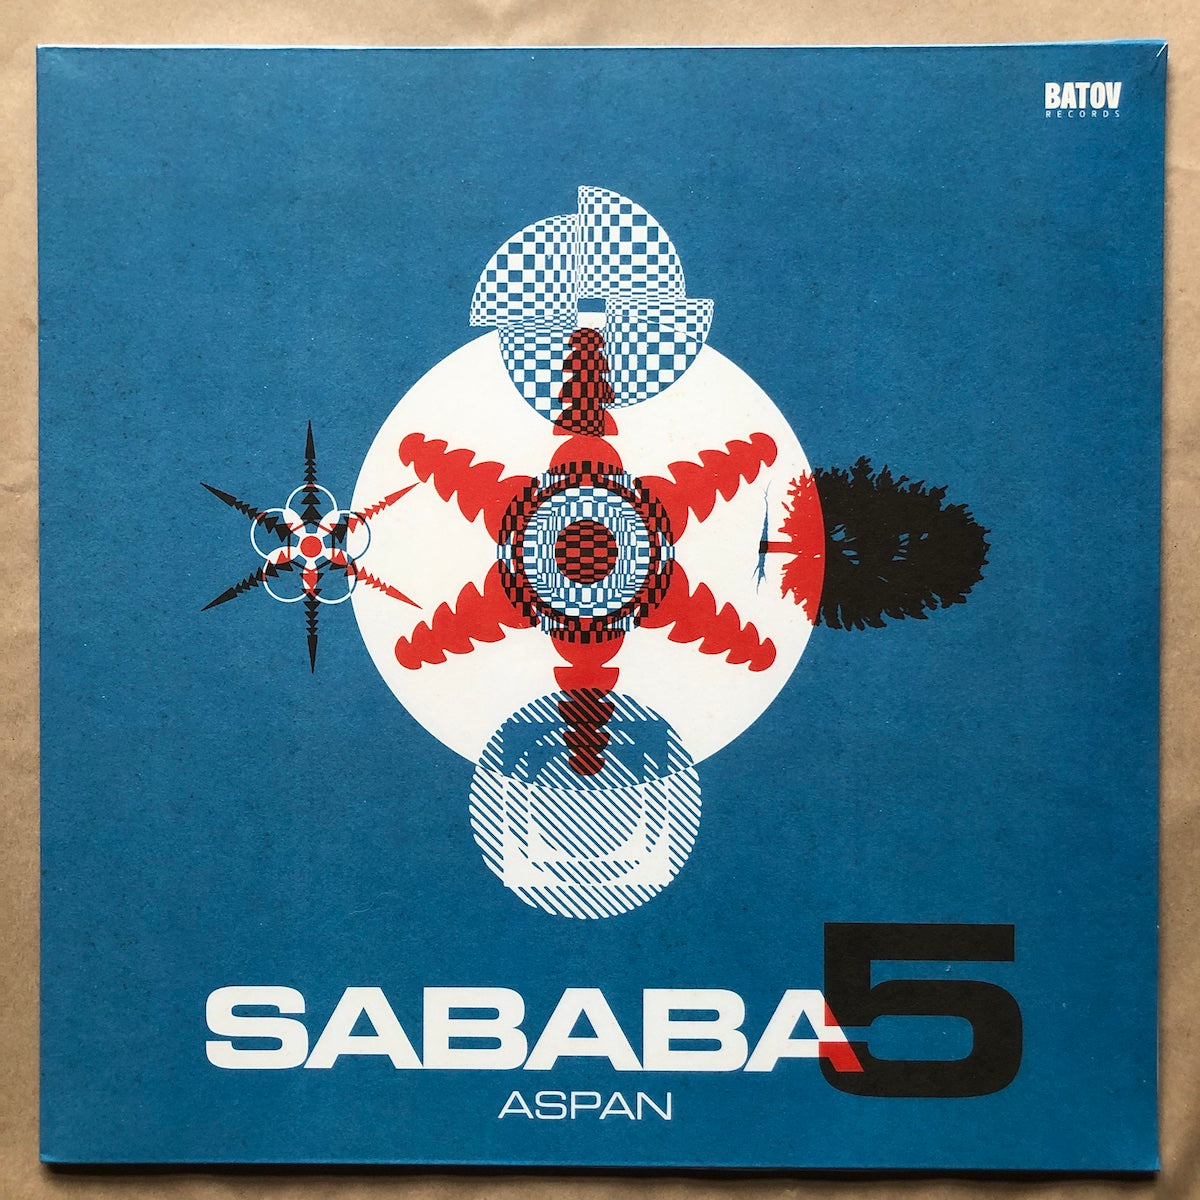 Aspan: Vinyl LP